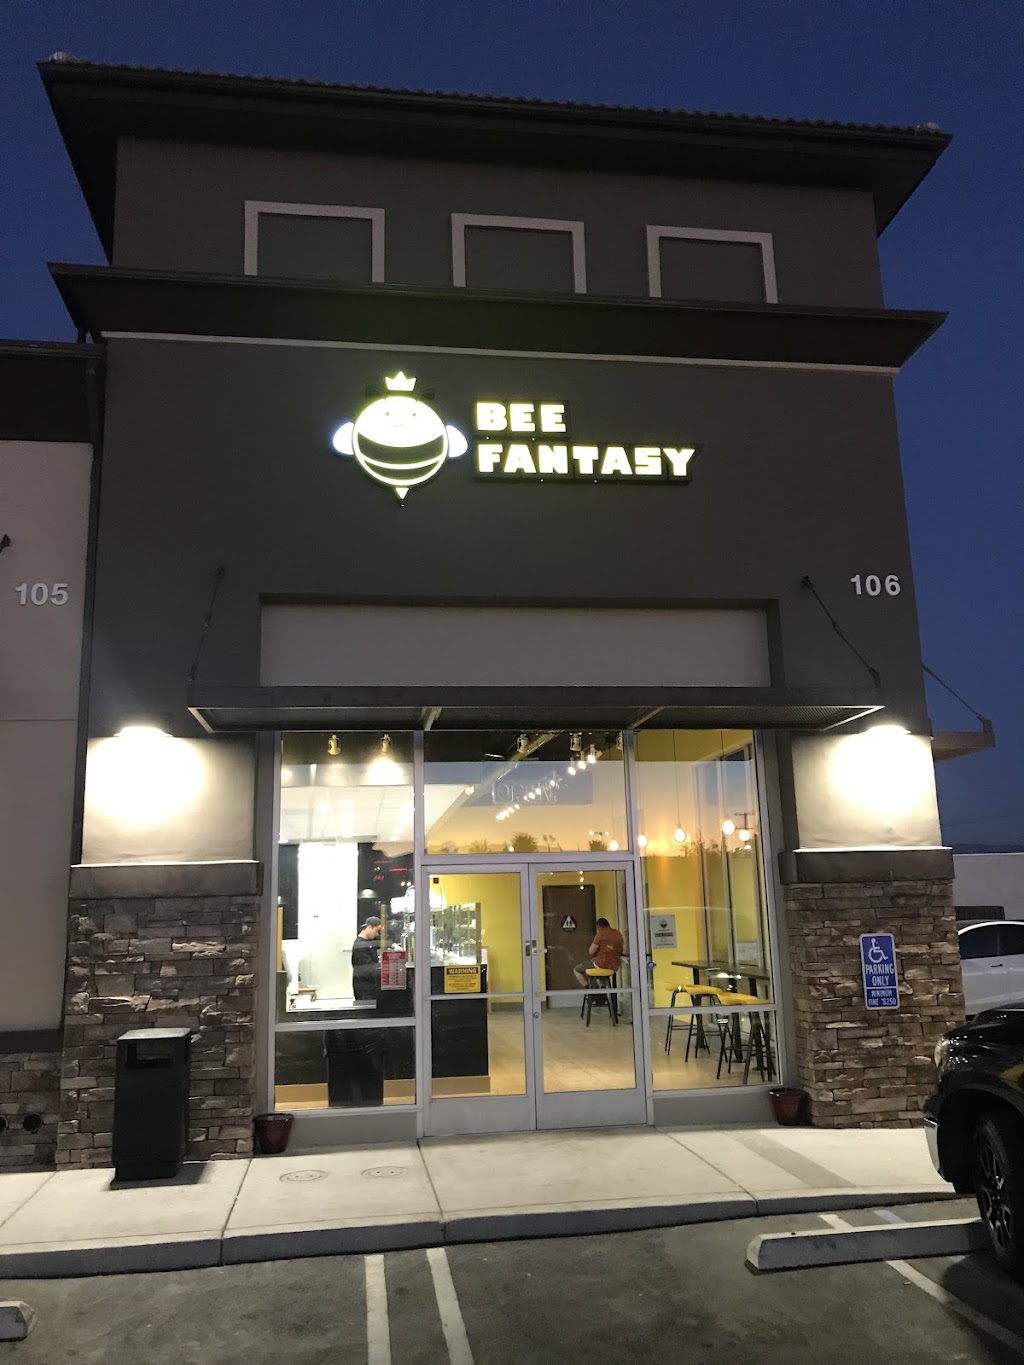 Bee Fantasy Tea Bar | restaurant | 17129 Bear Valley Rd #106, Hesperia, CA 92345, USA | 6266785601 OR +1 626-678-5601